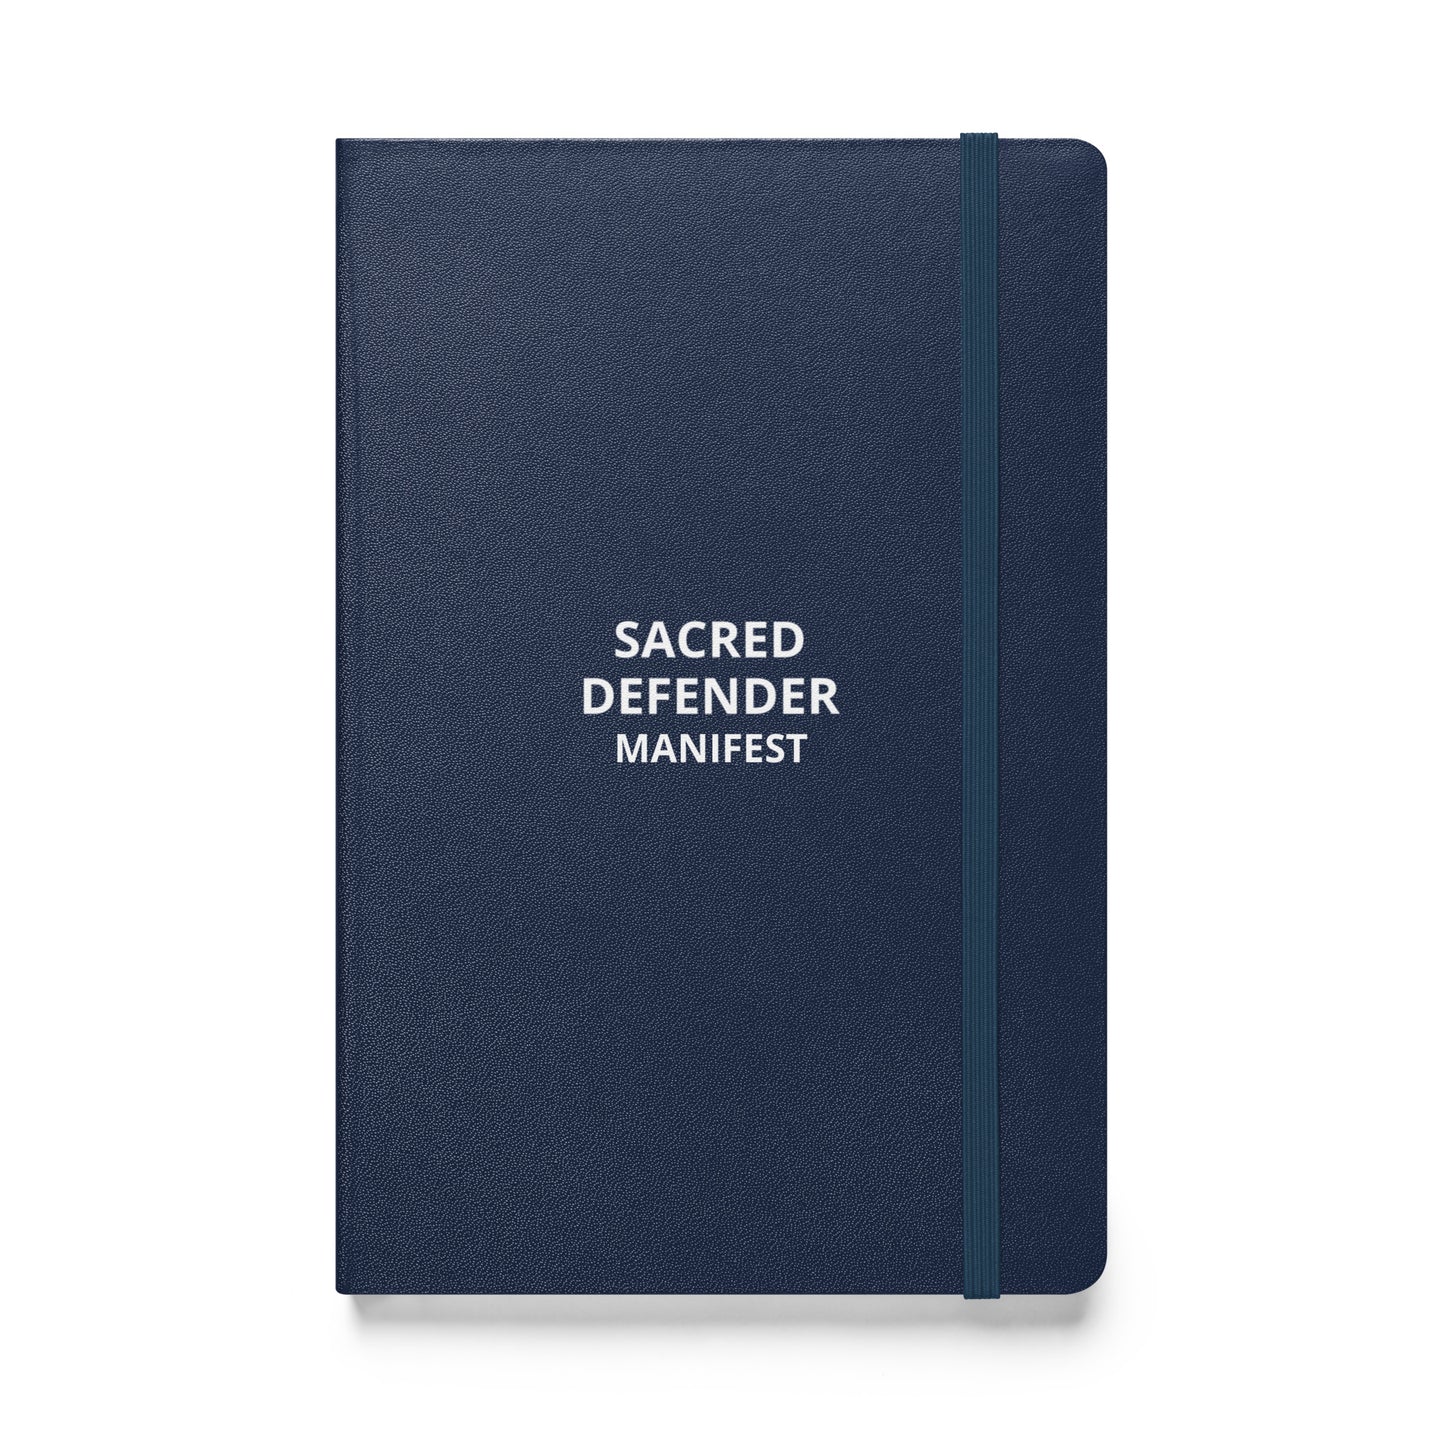 Sacred Defender "Manifest" Daily Journal Hardcover bound notebook